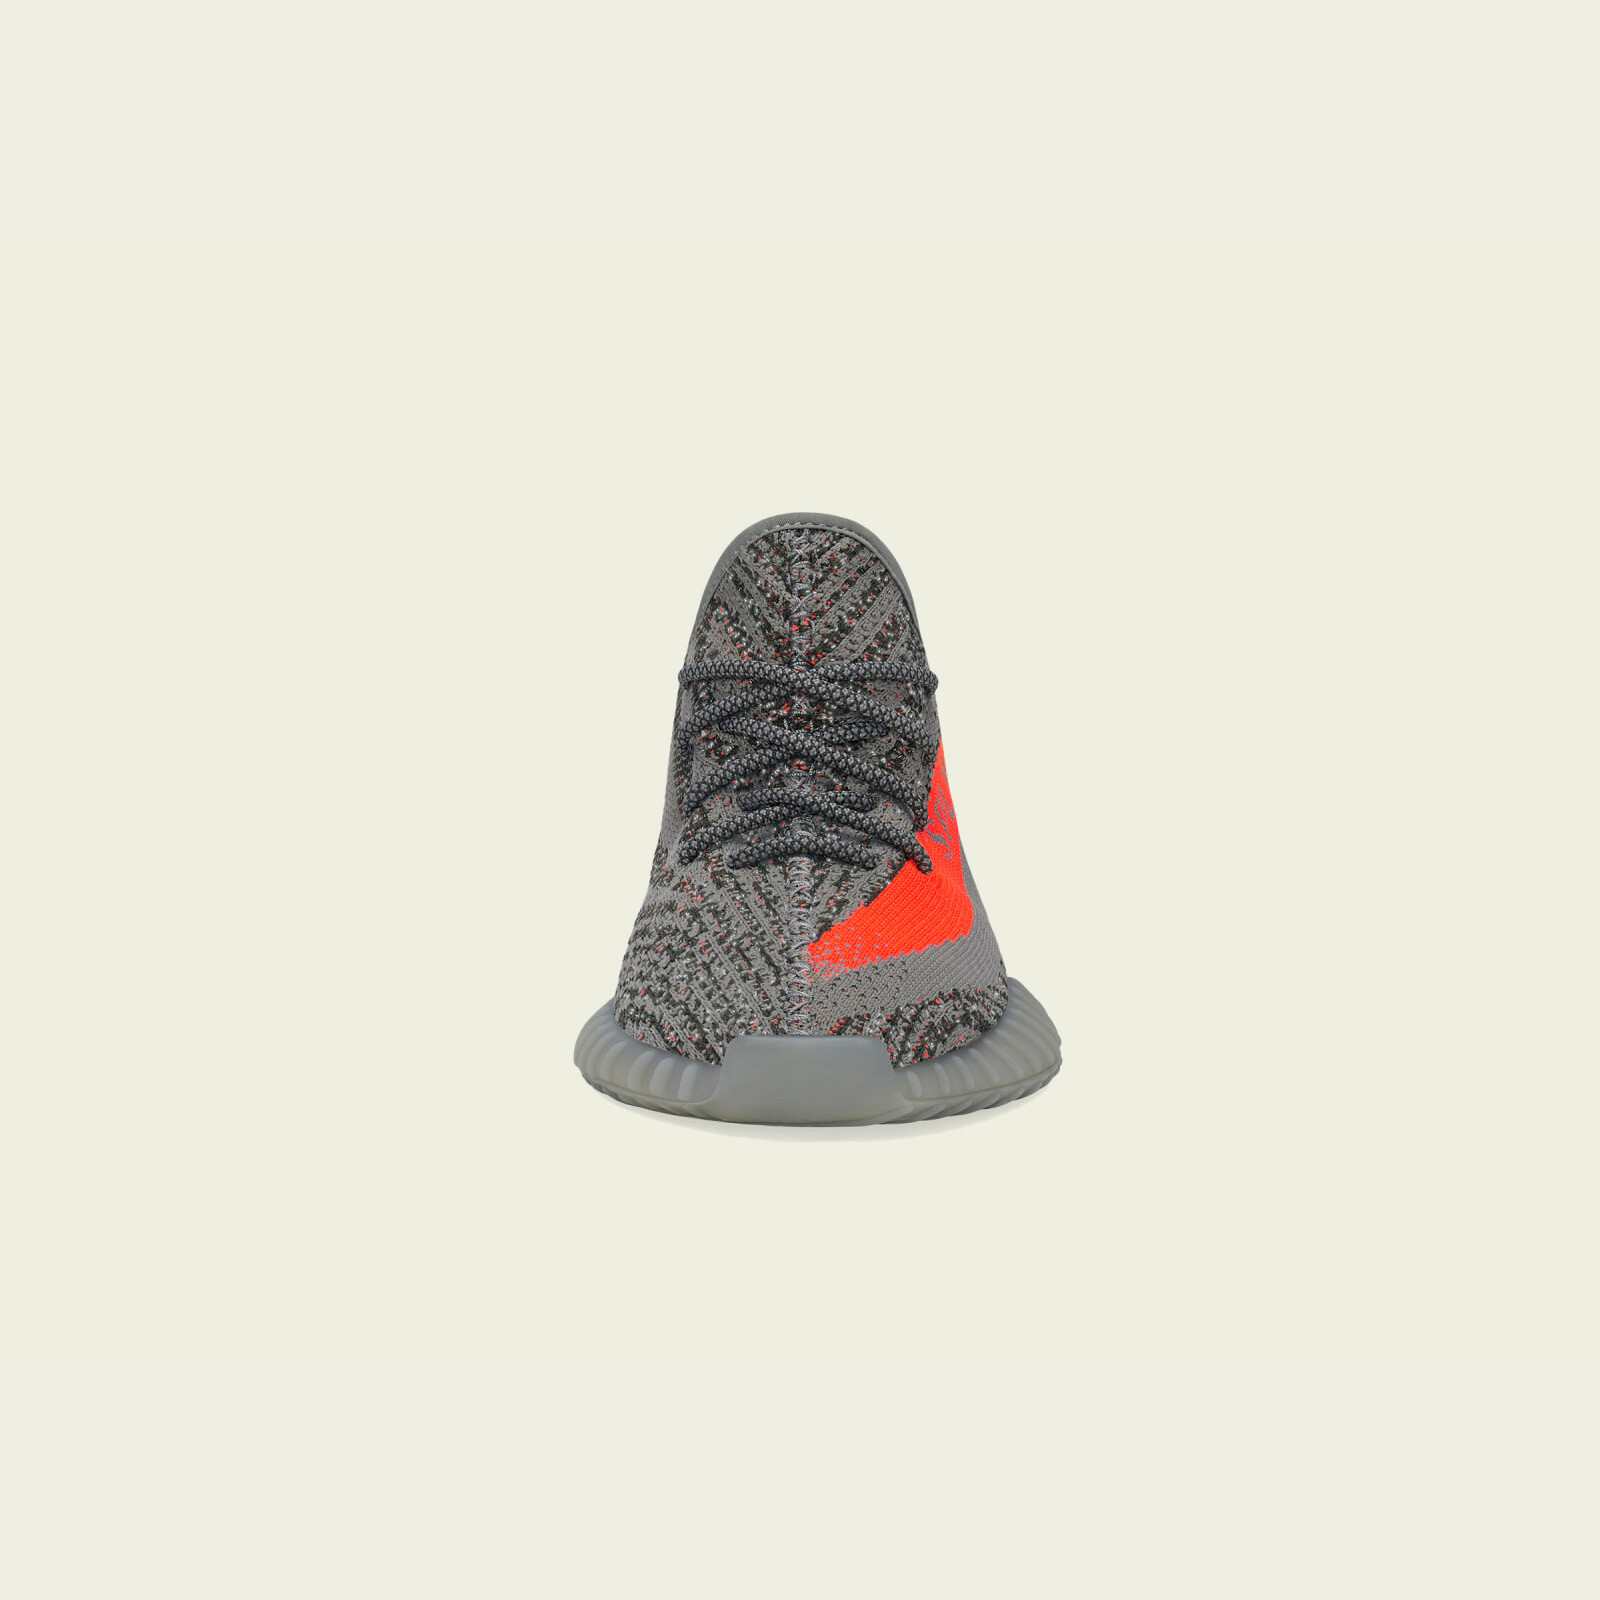 Adidas Yeezy Boost 350 V2
« Beluga Reflective »